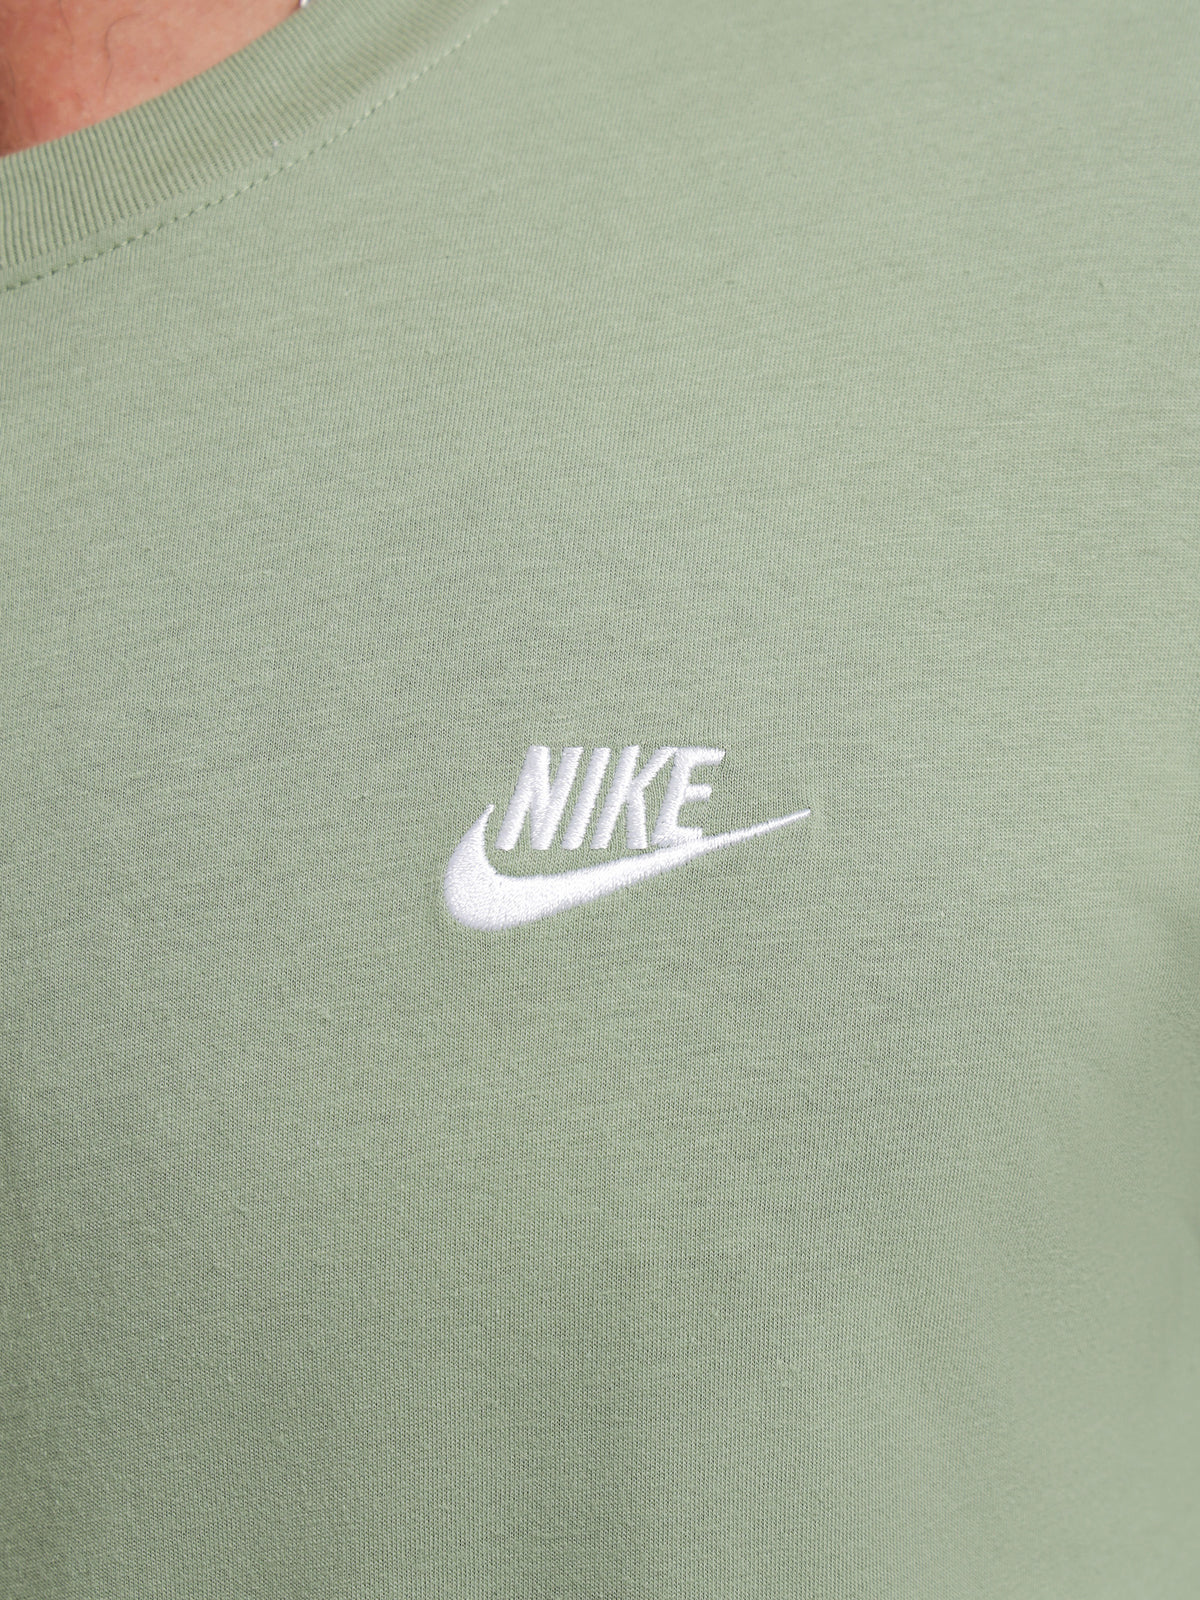 Sportswear Club T-Shirt in Oil Green